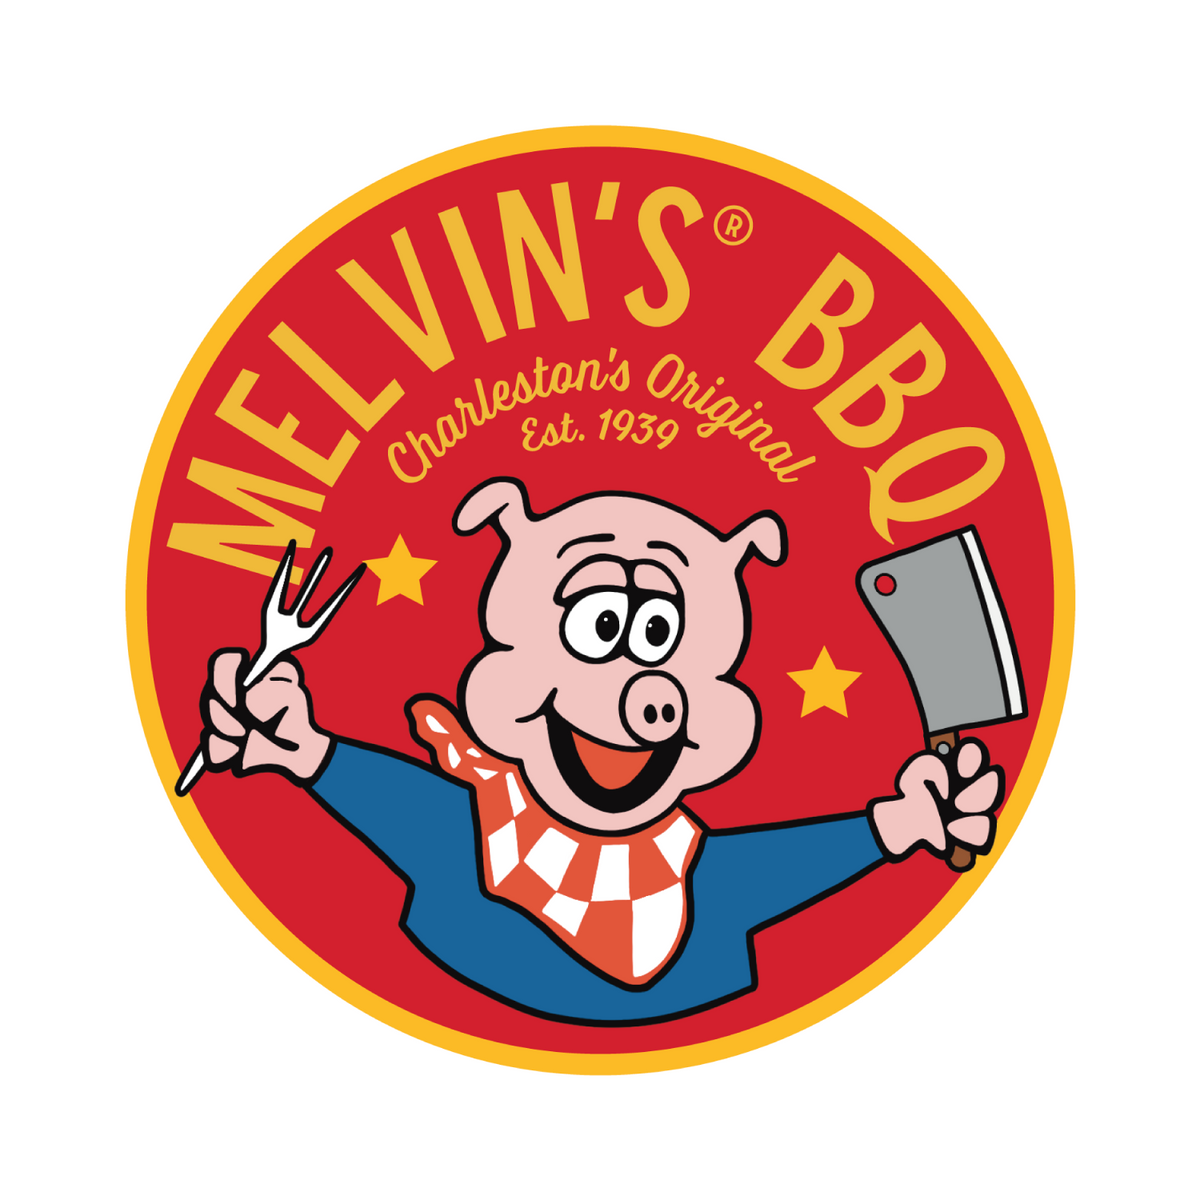 melvin's bbq red circle pig sticker